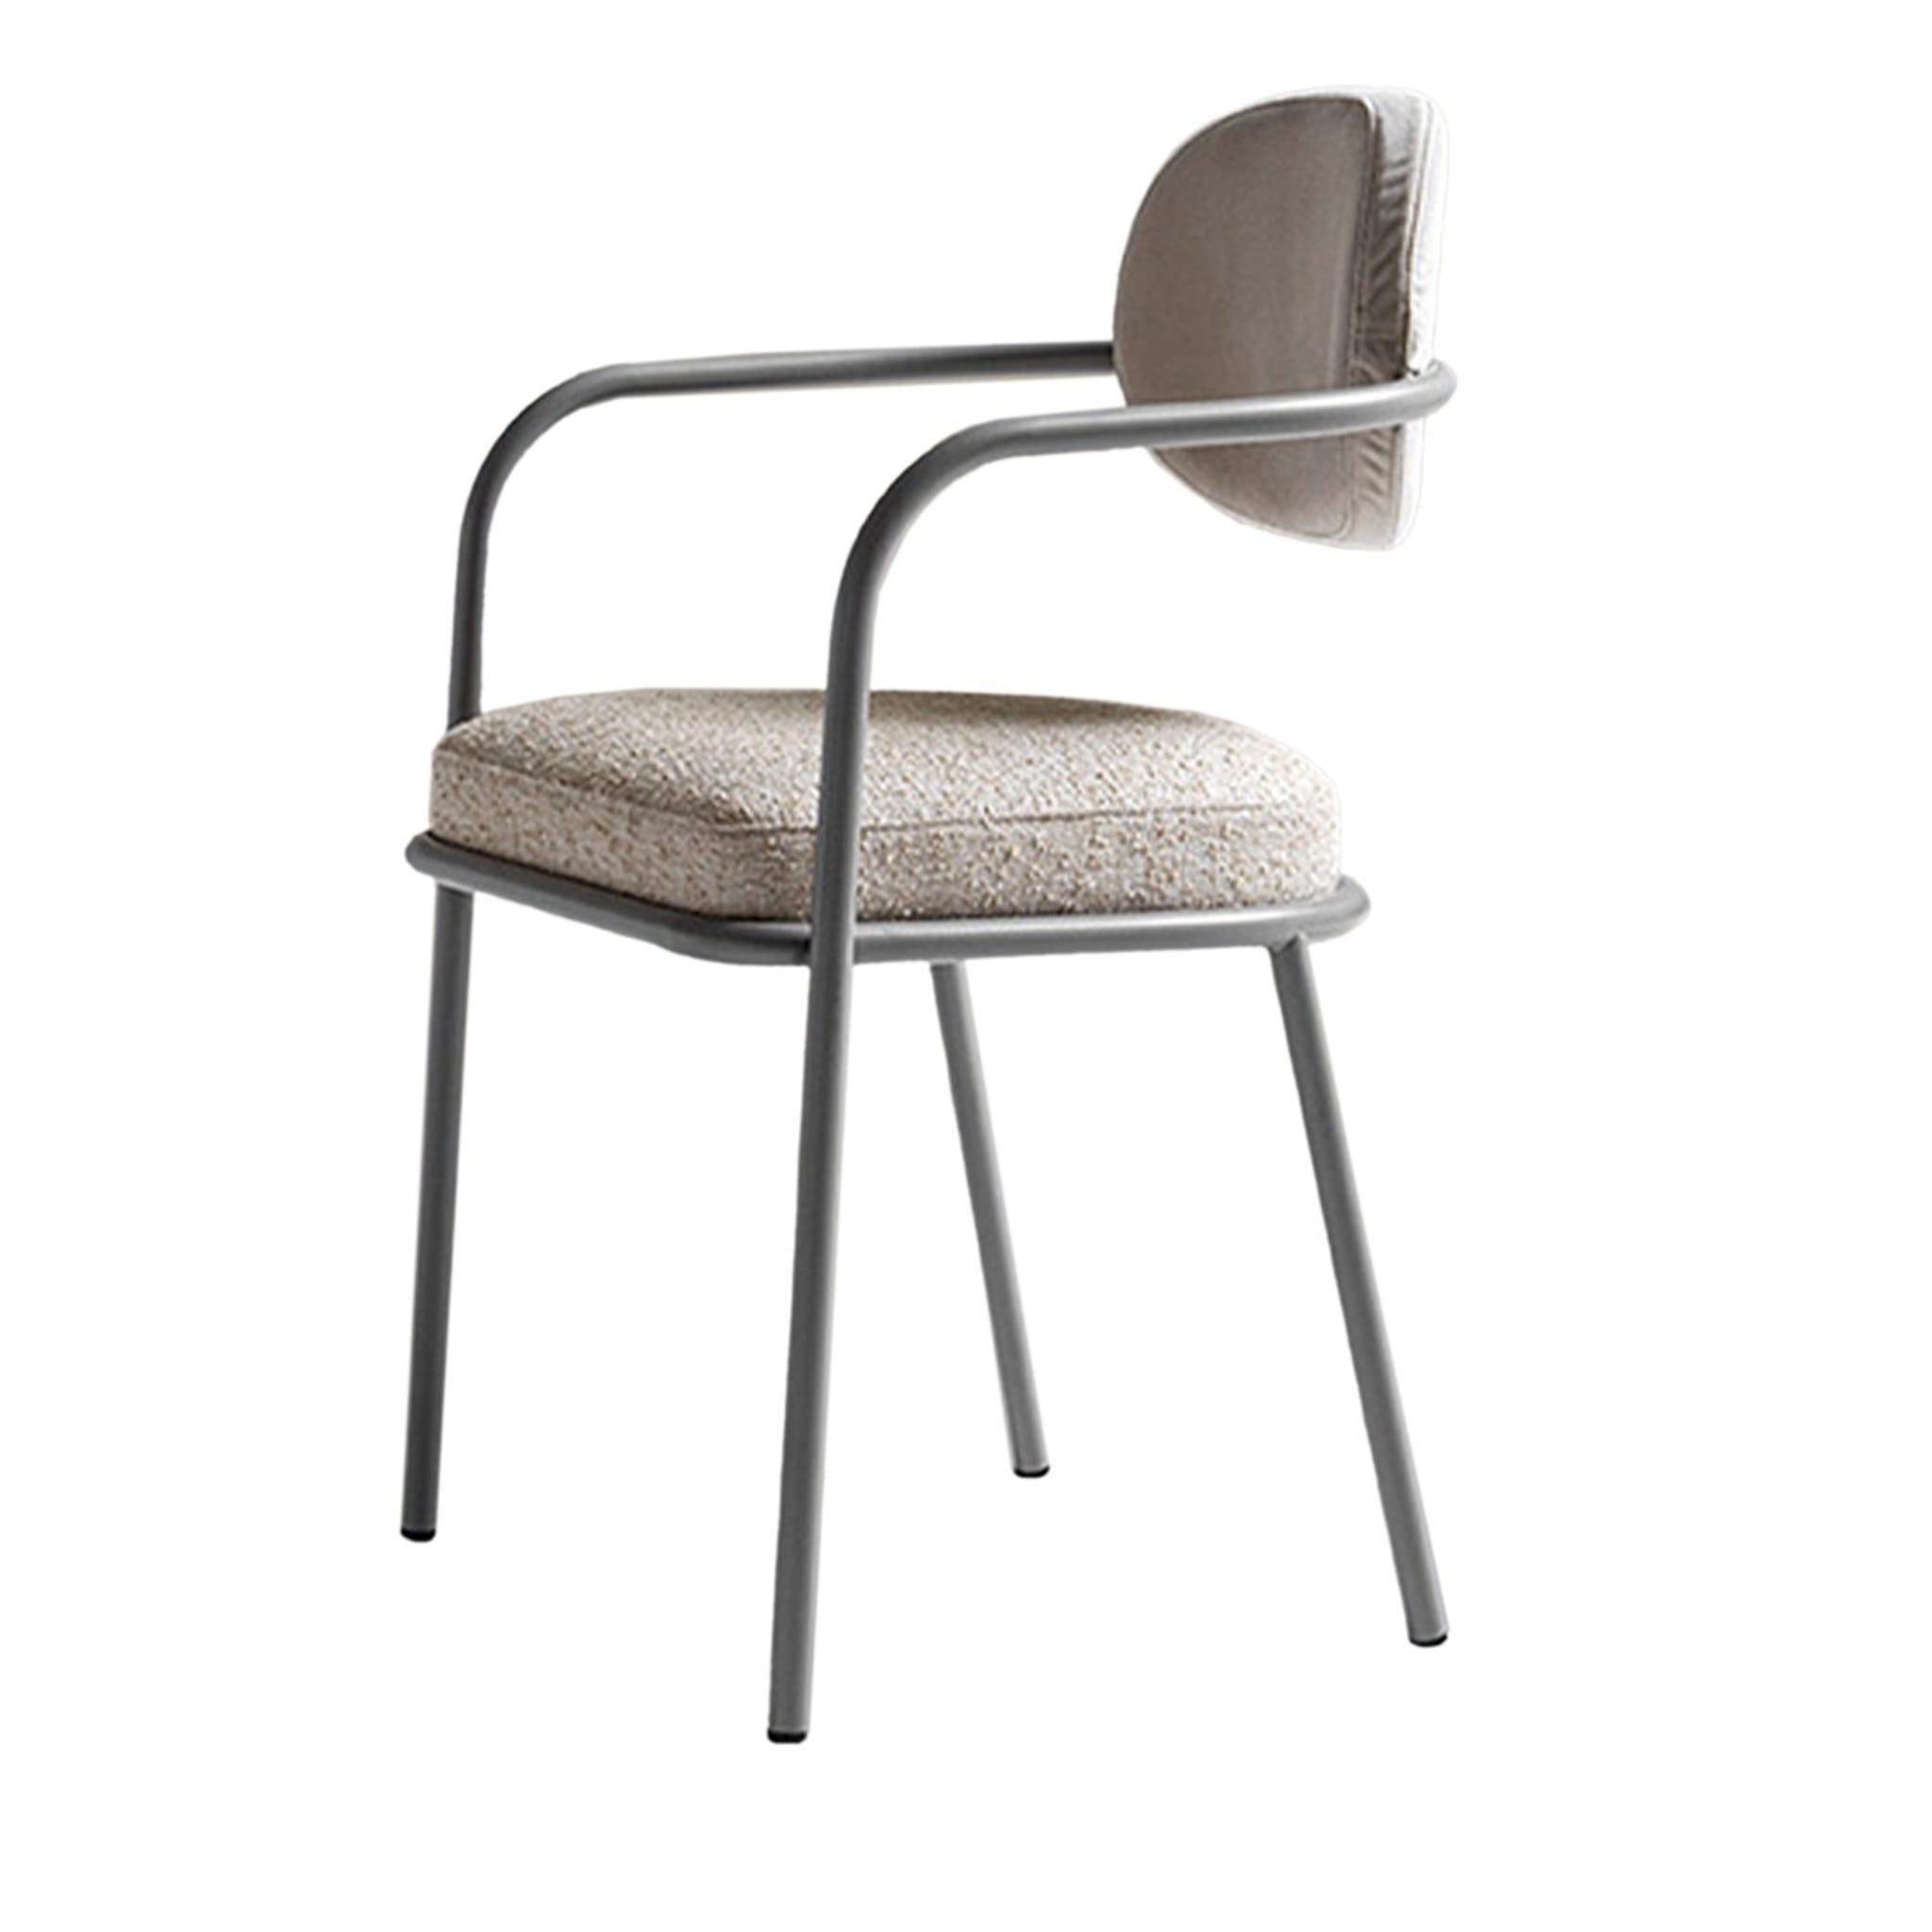 Ula Unique Italian Artisan Chair